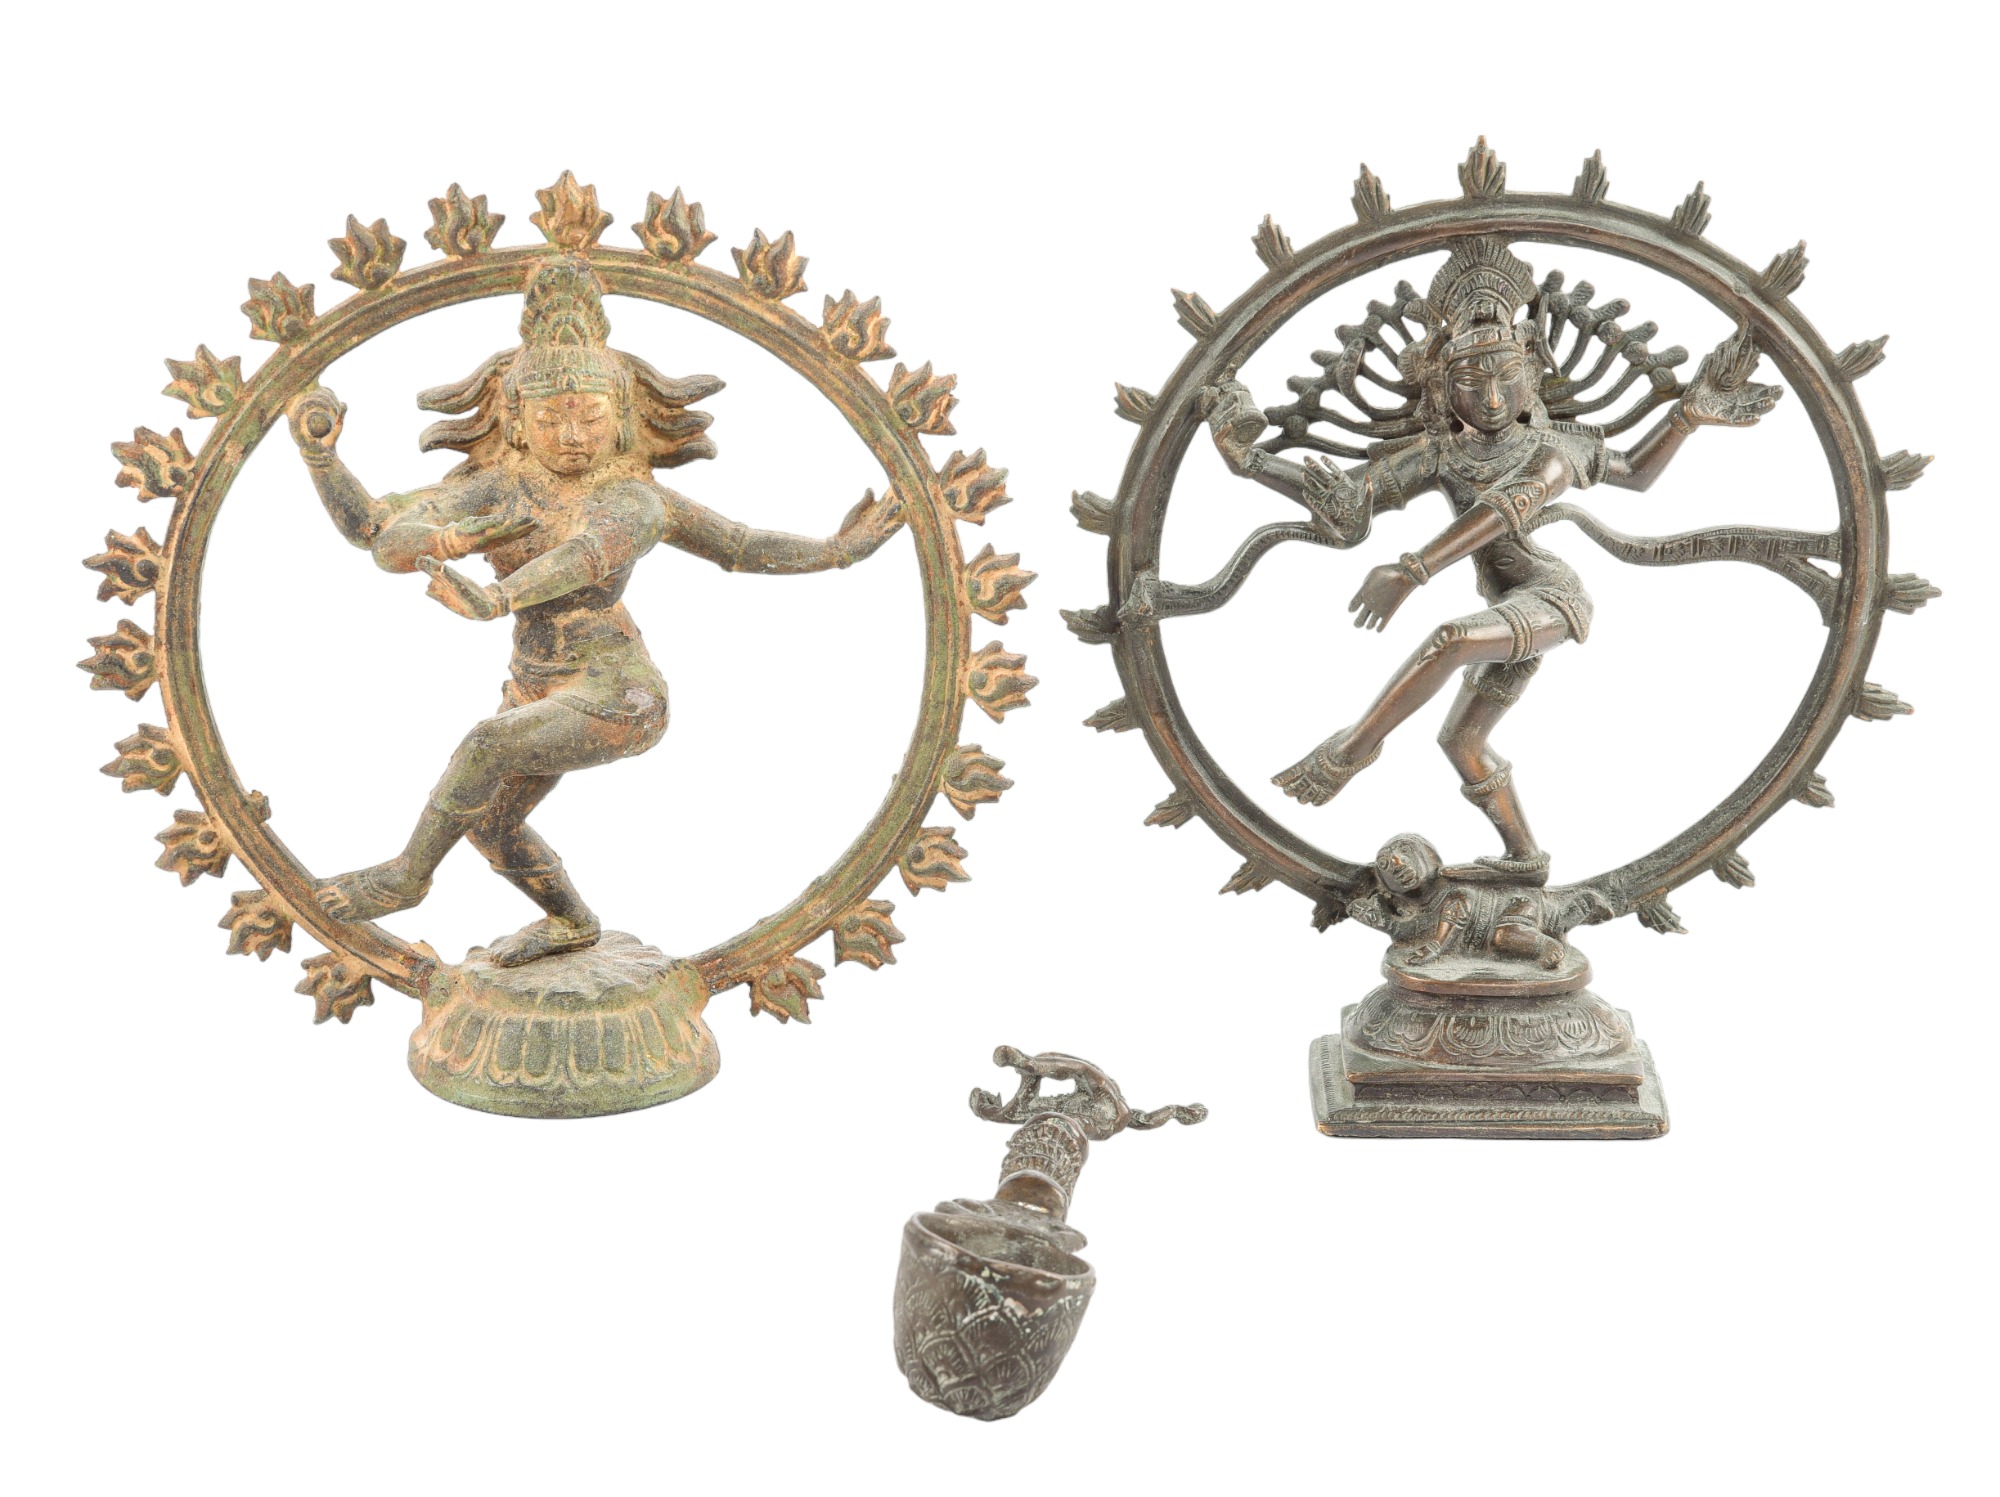  3 Nataraja dancing Shiva items  3ca6f8